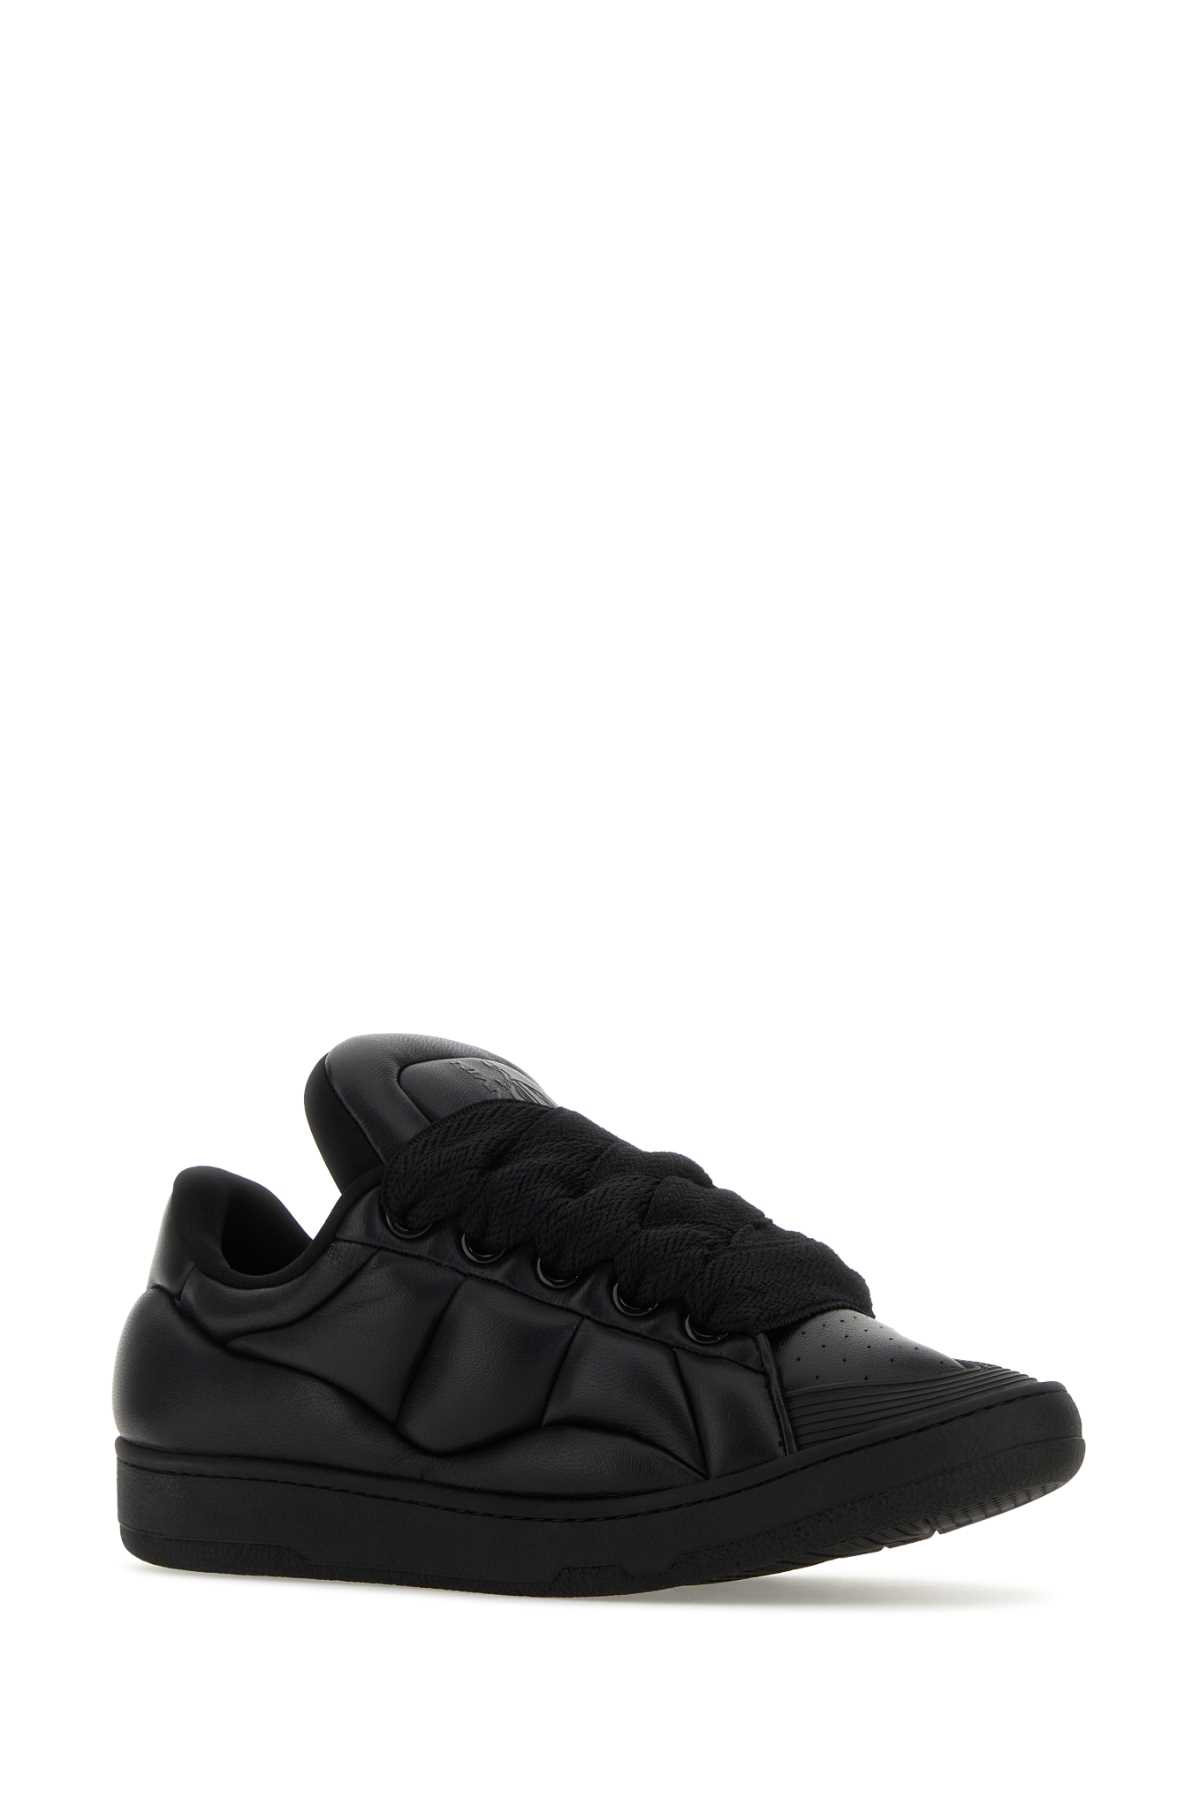 Lanvin Black Leather Curb Xl Sneakers In Blackblack